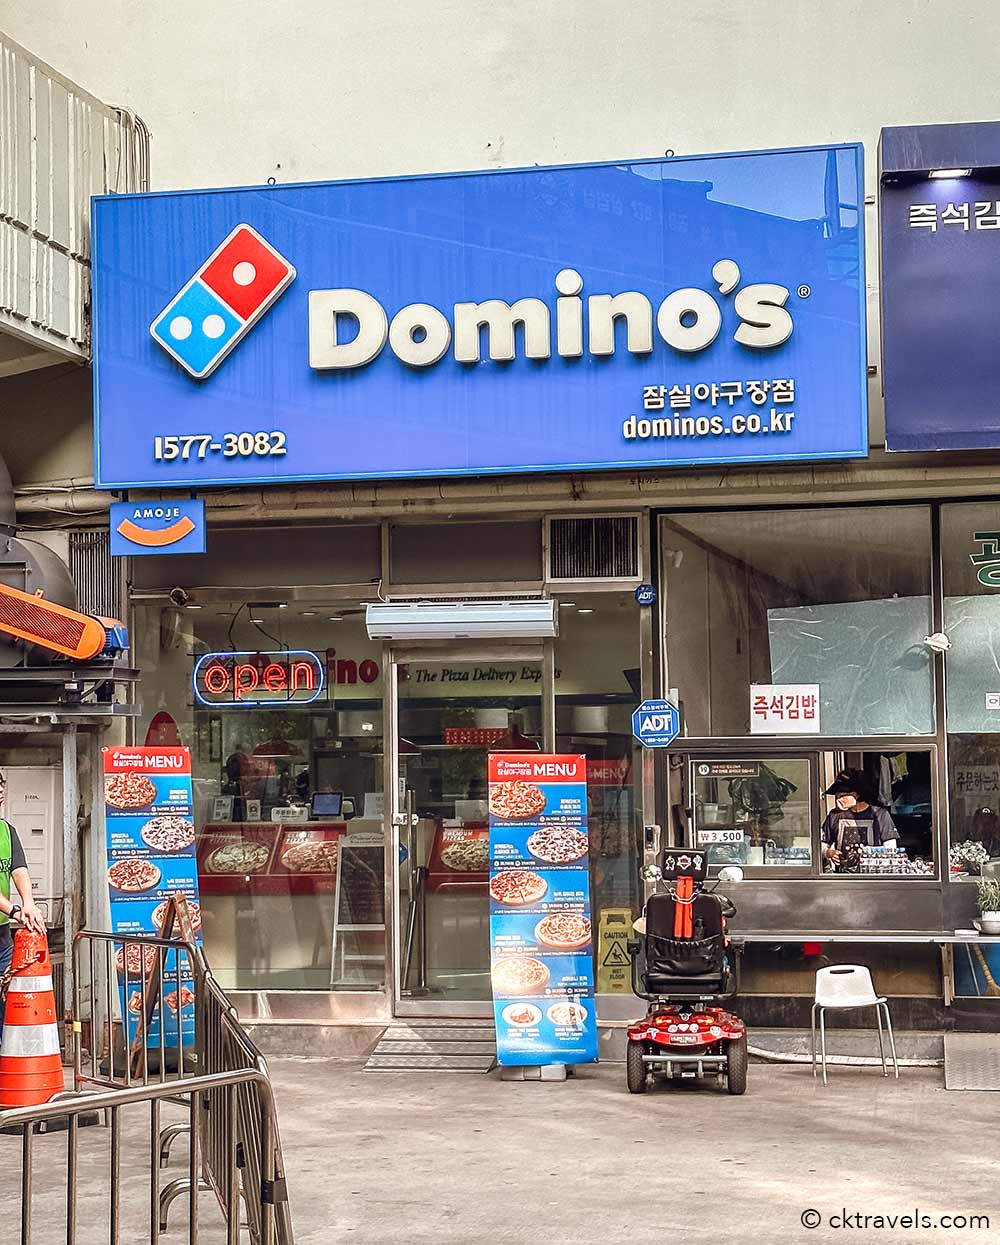 Dominos pizza at Jamsil Stadium